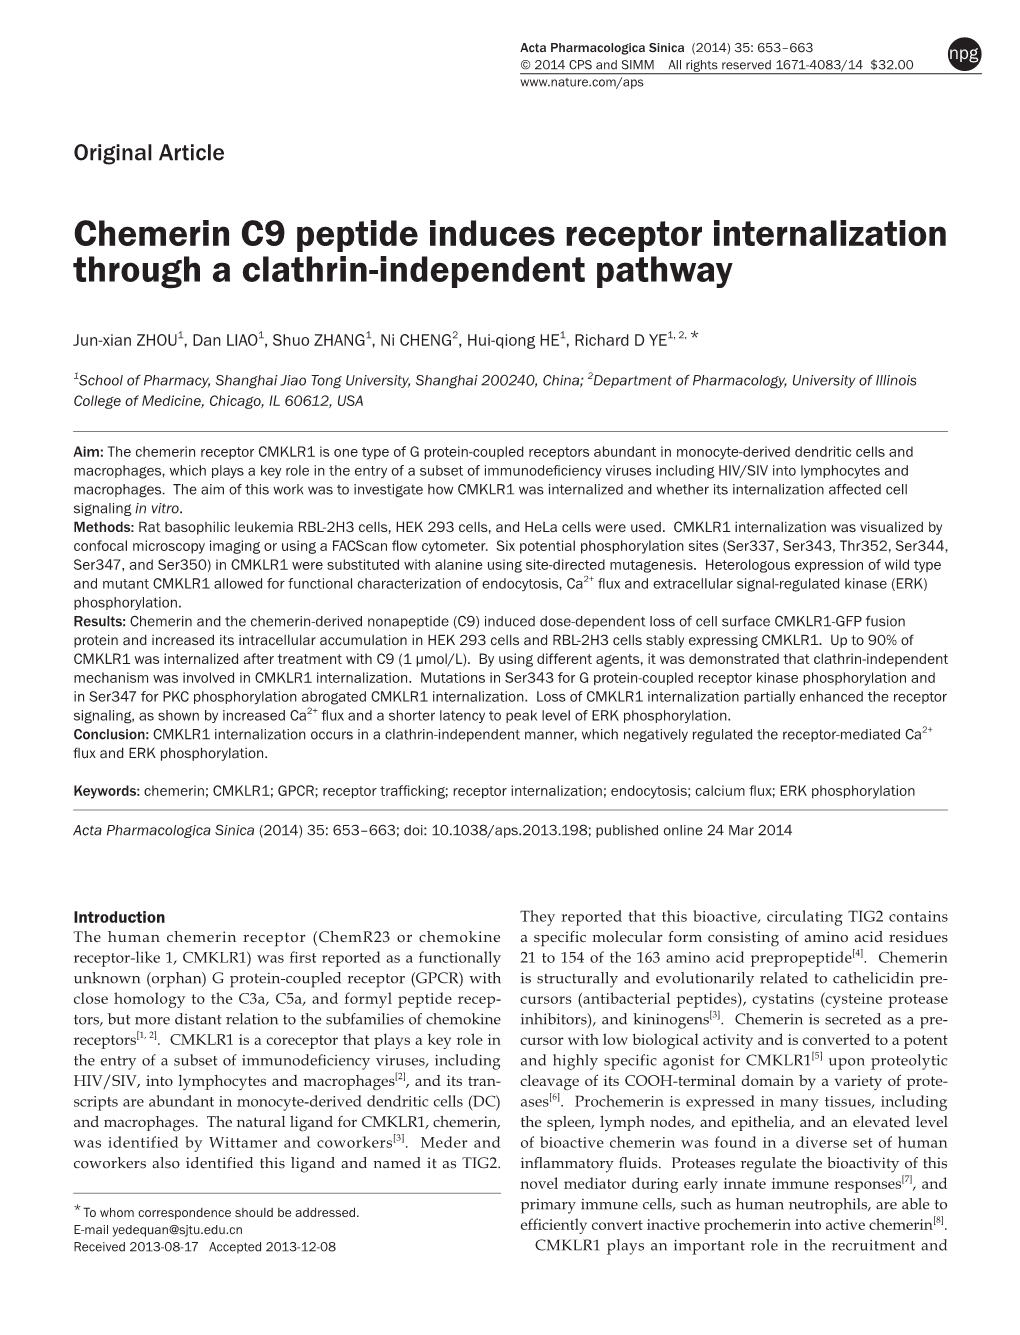 Chemerin C9 Peptide Induces Receptor Internalization Through a Clathrin-Independent Pathway